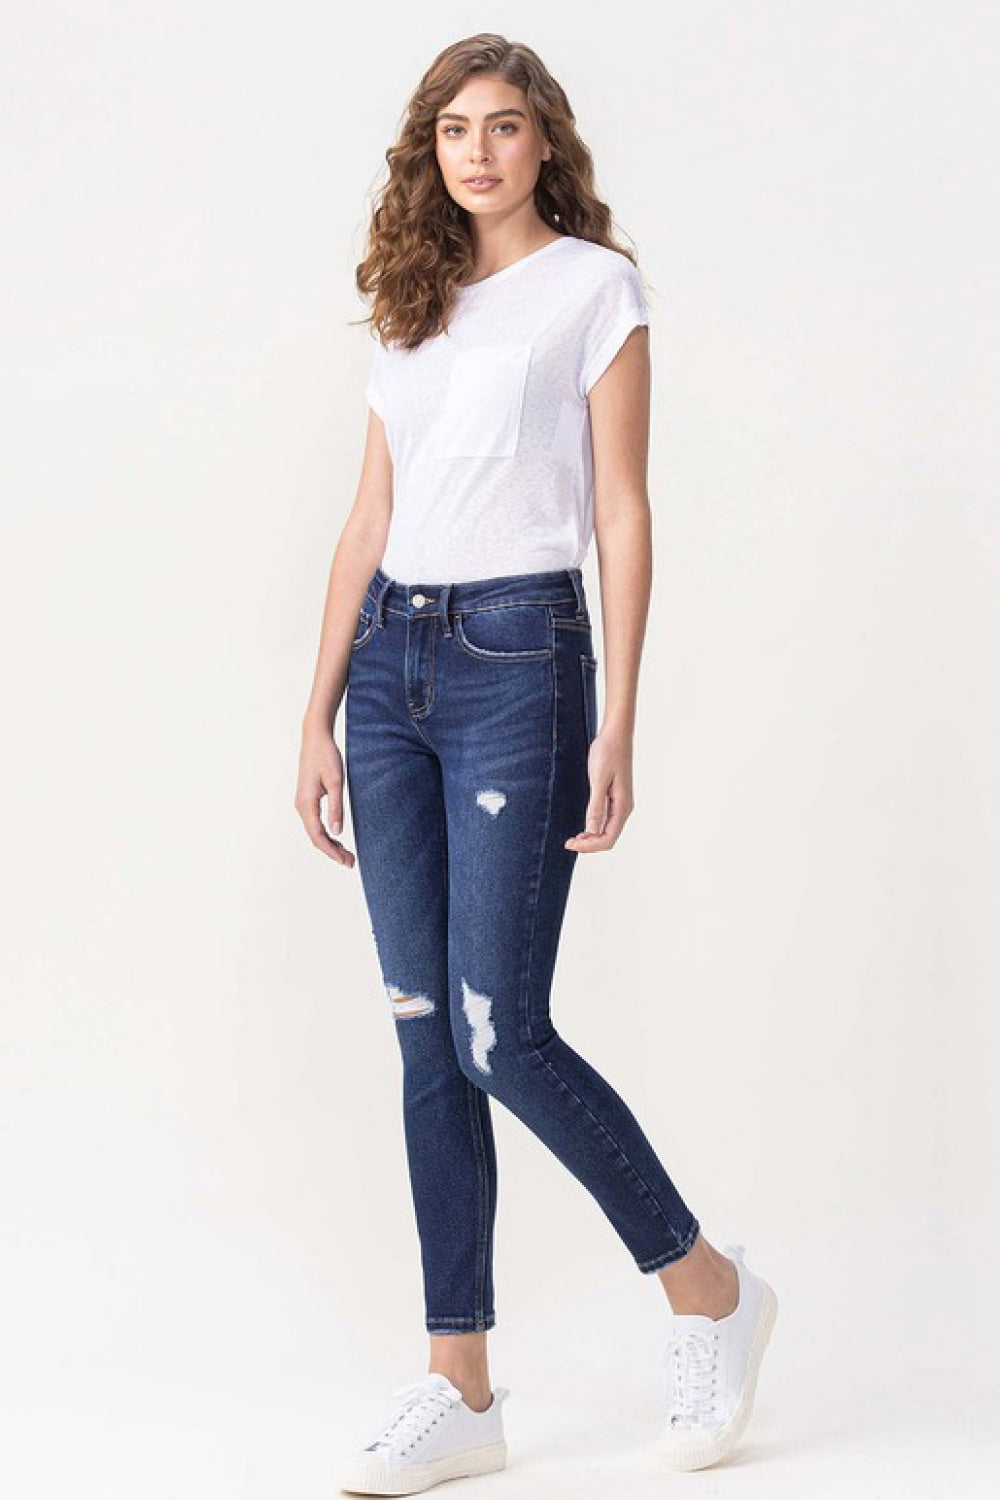 LOVERVET by Vervet Full Size Chelsea Midrise Crop Skinny Jeans in Dark Wash